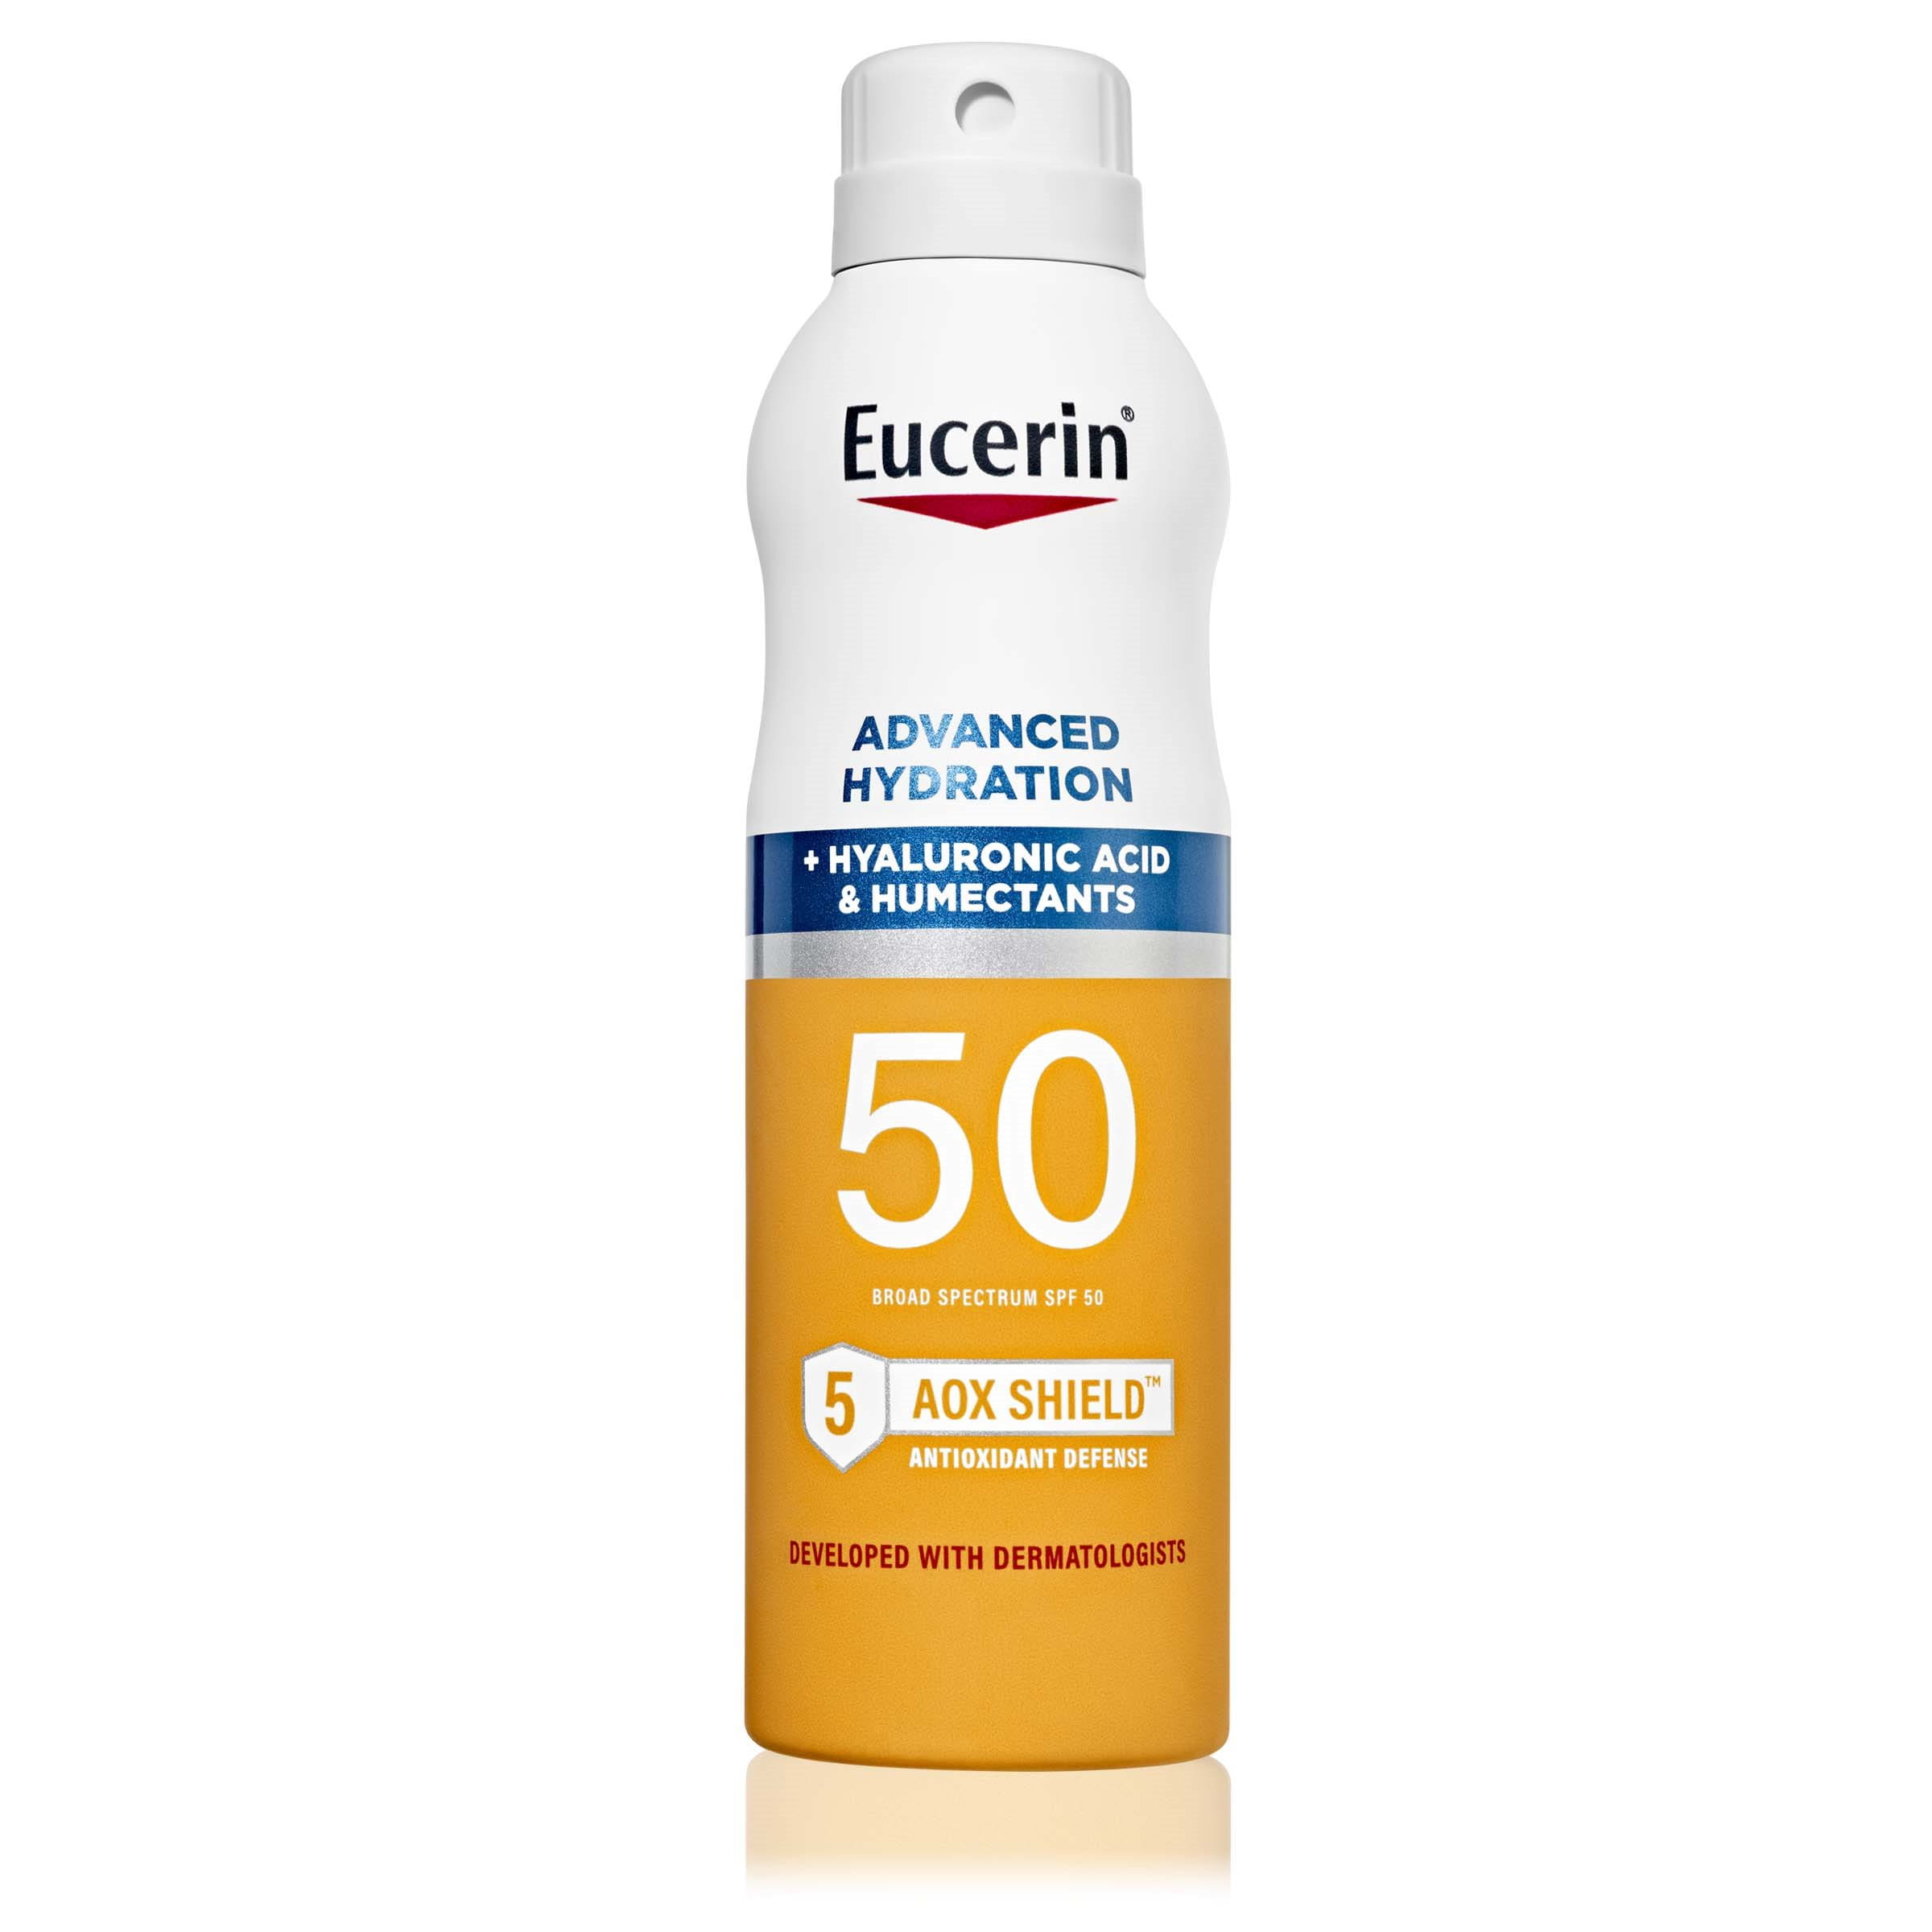 Eucerin Advanced Hydration Spray